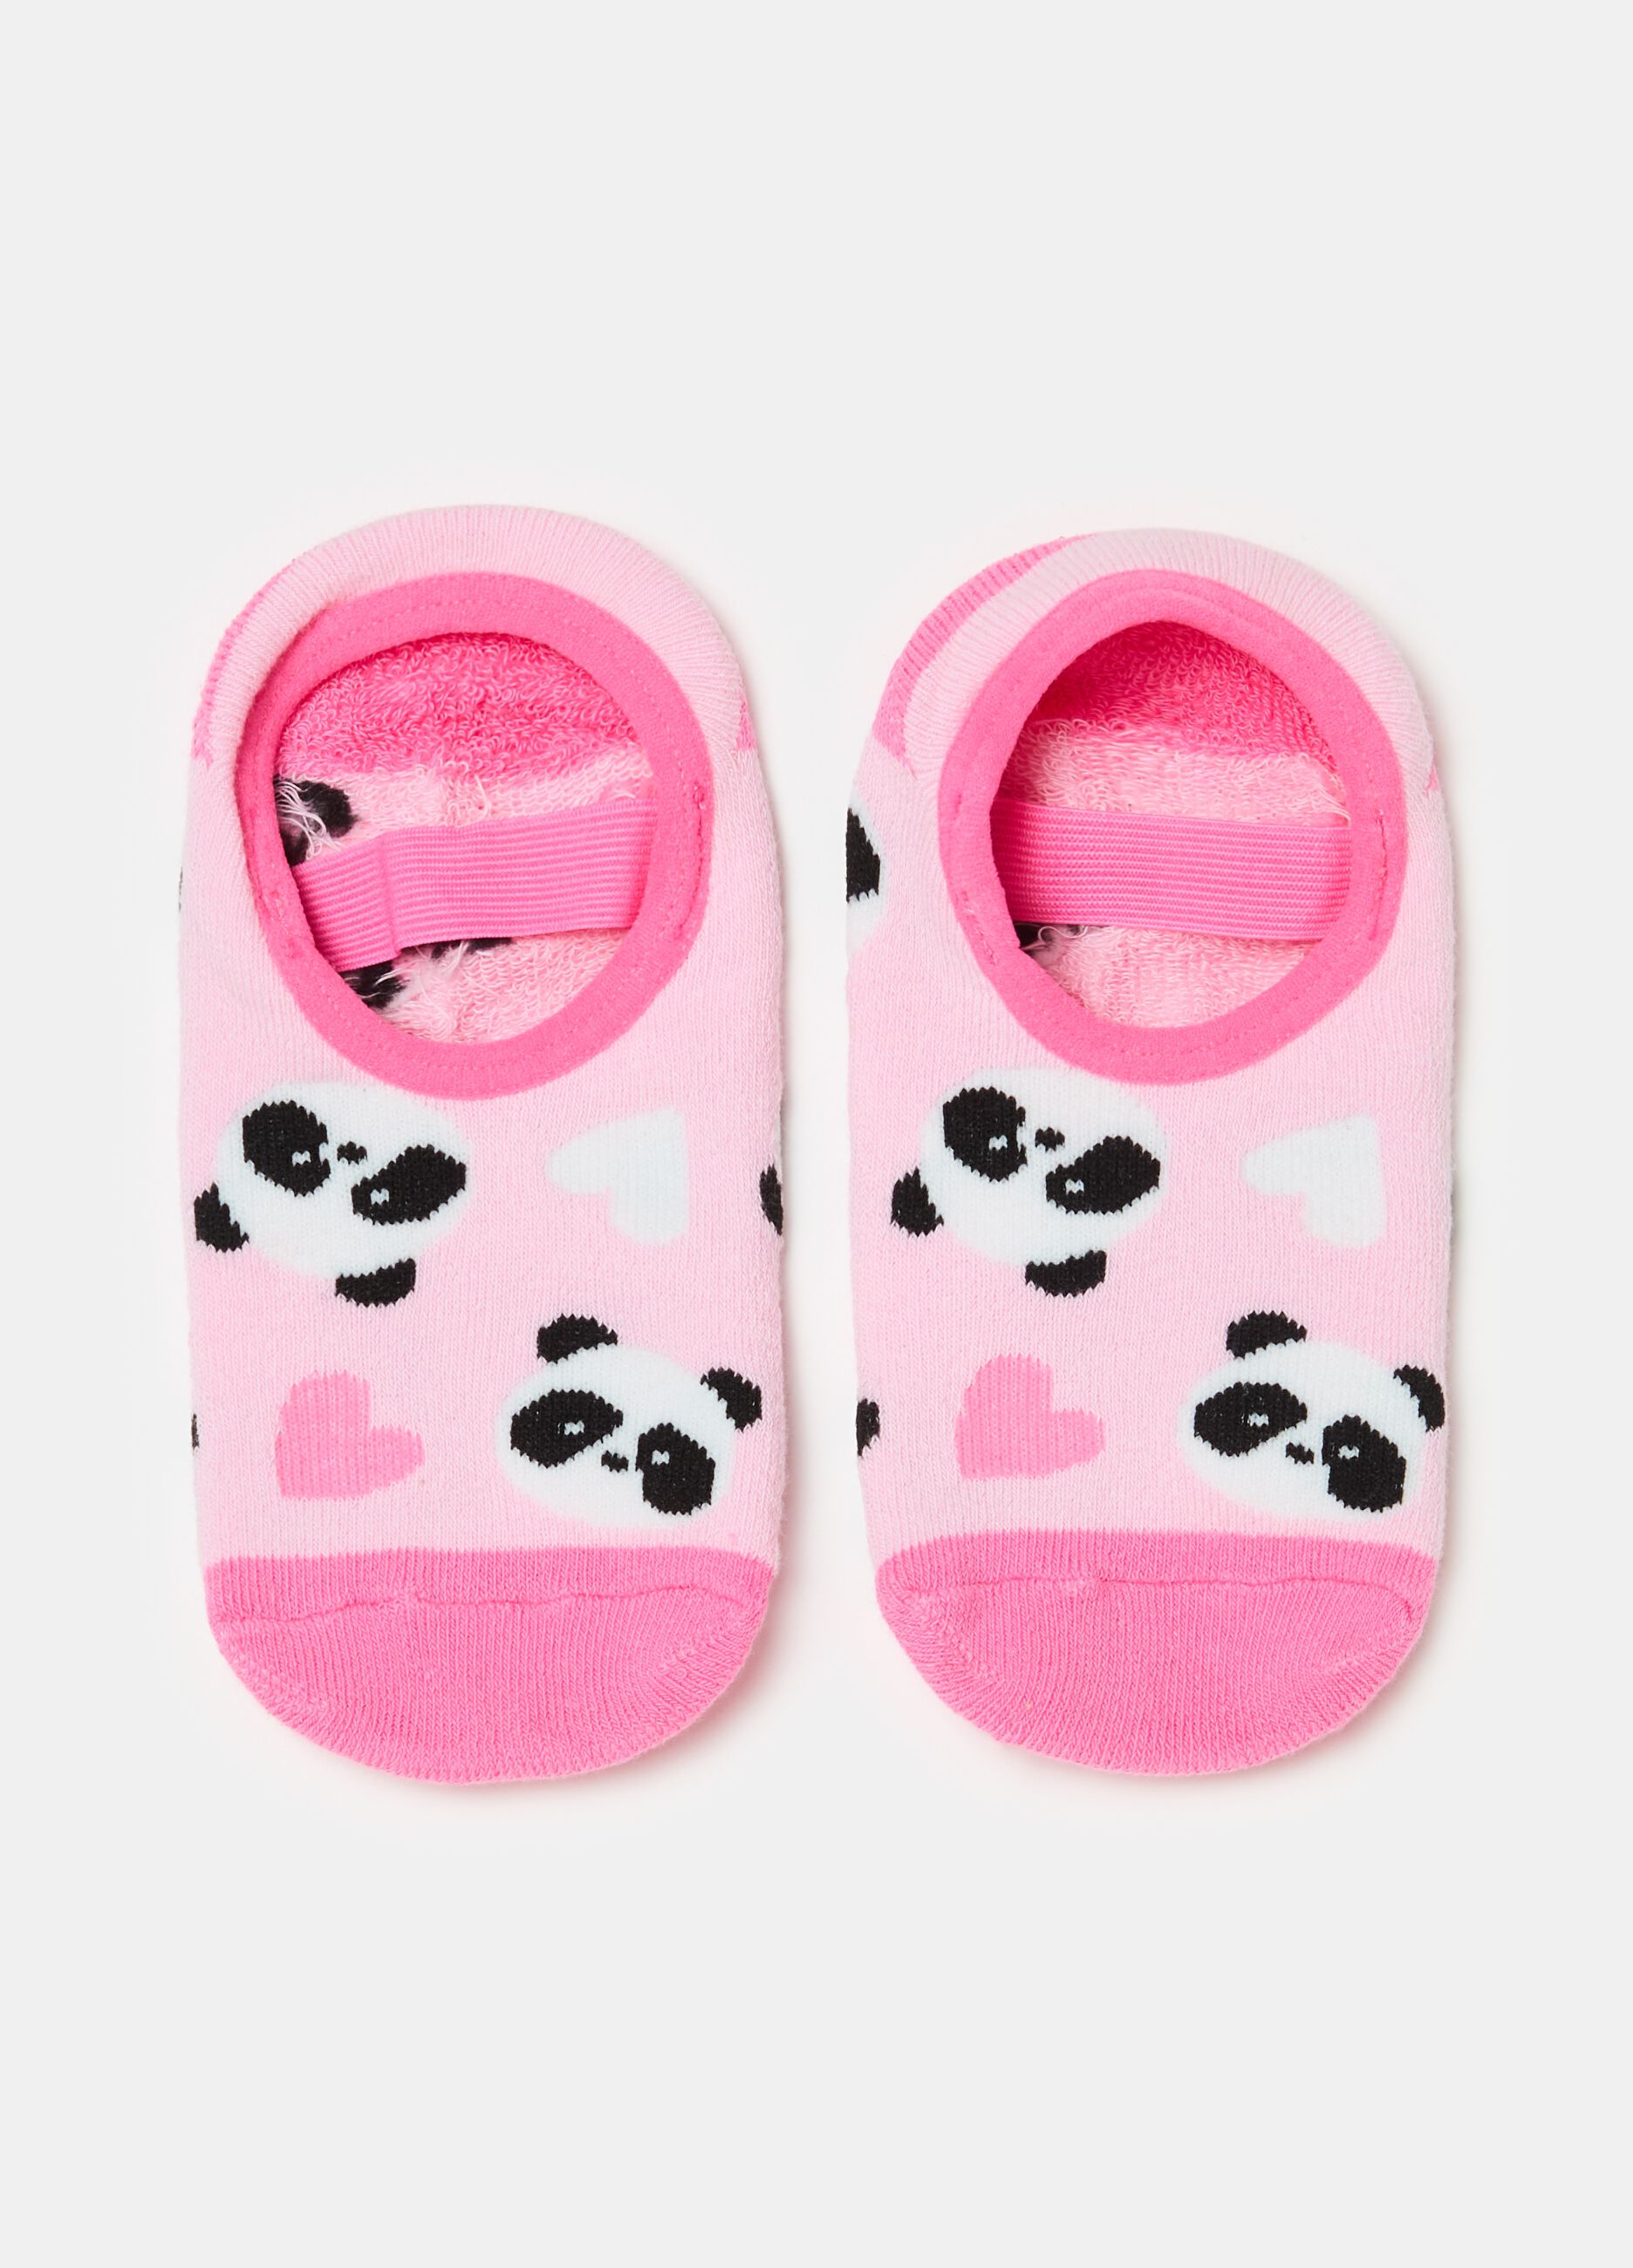 Slipper socks with panda and hearts design